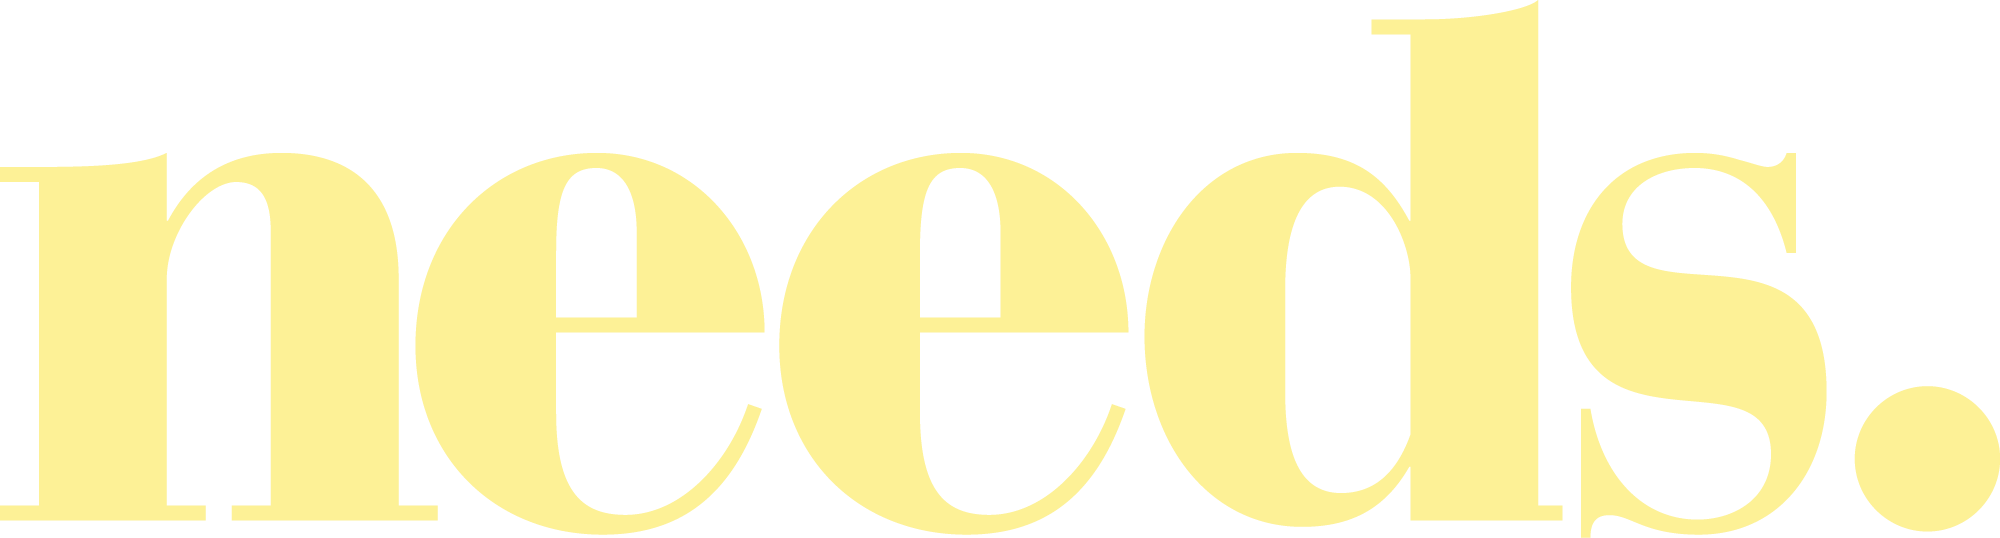 nedds-logo-yellow-1